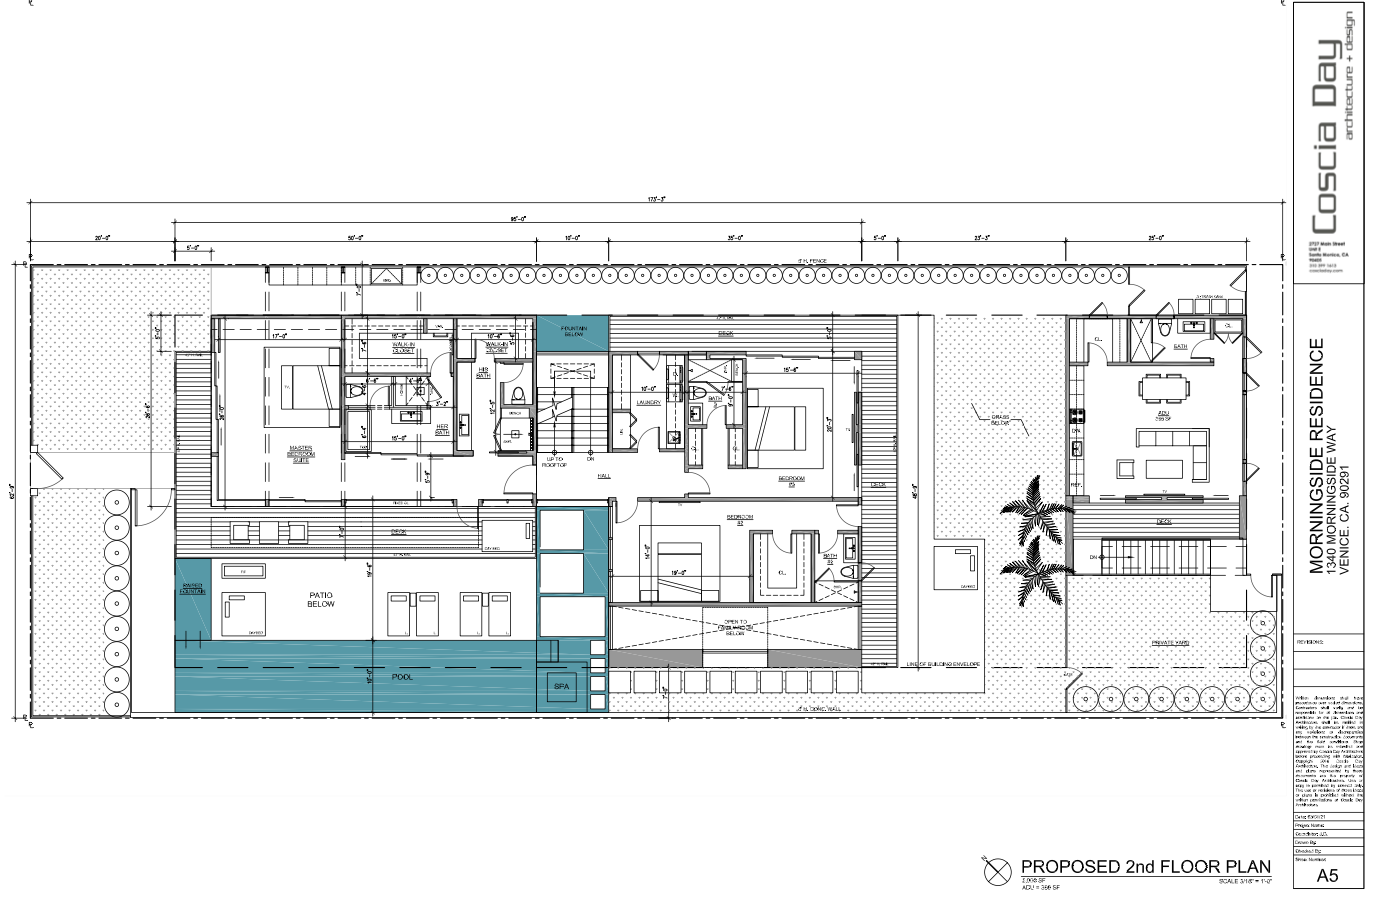 Conceptual Floor Plan (1st Level)